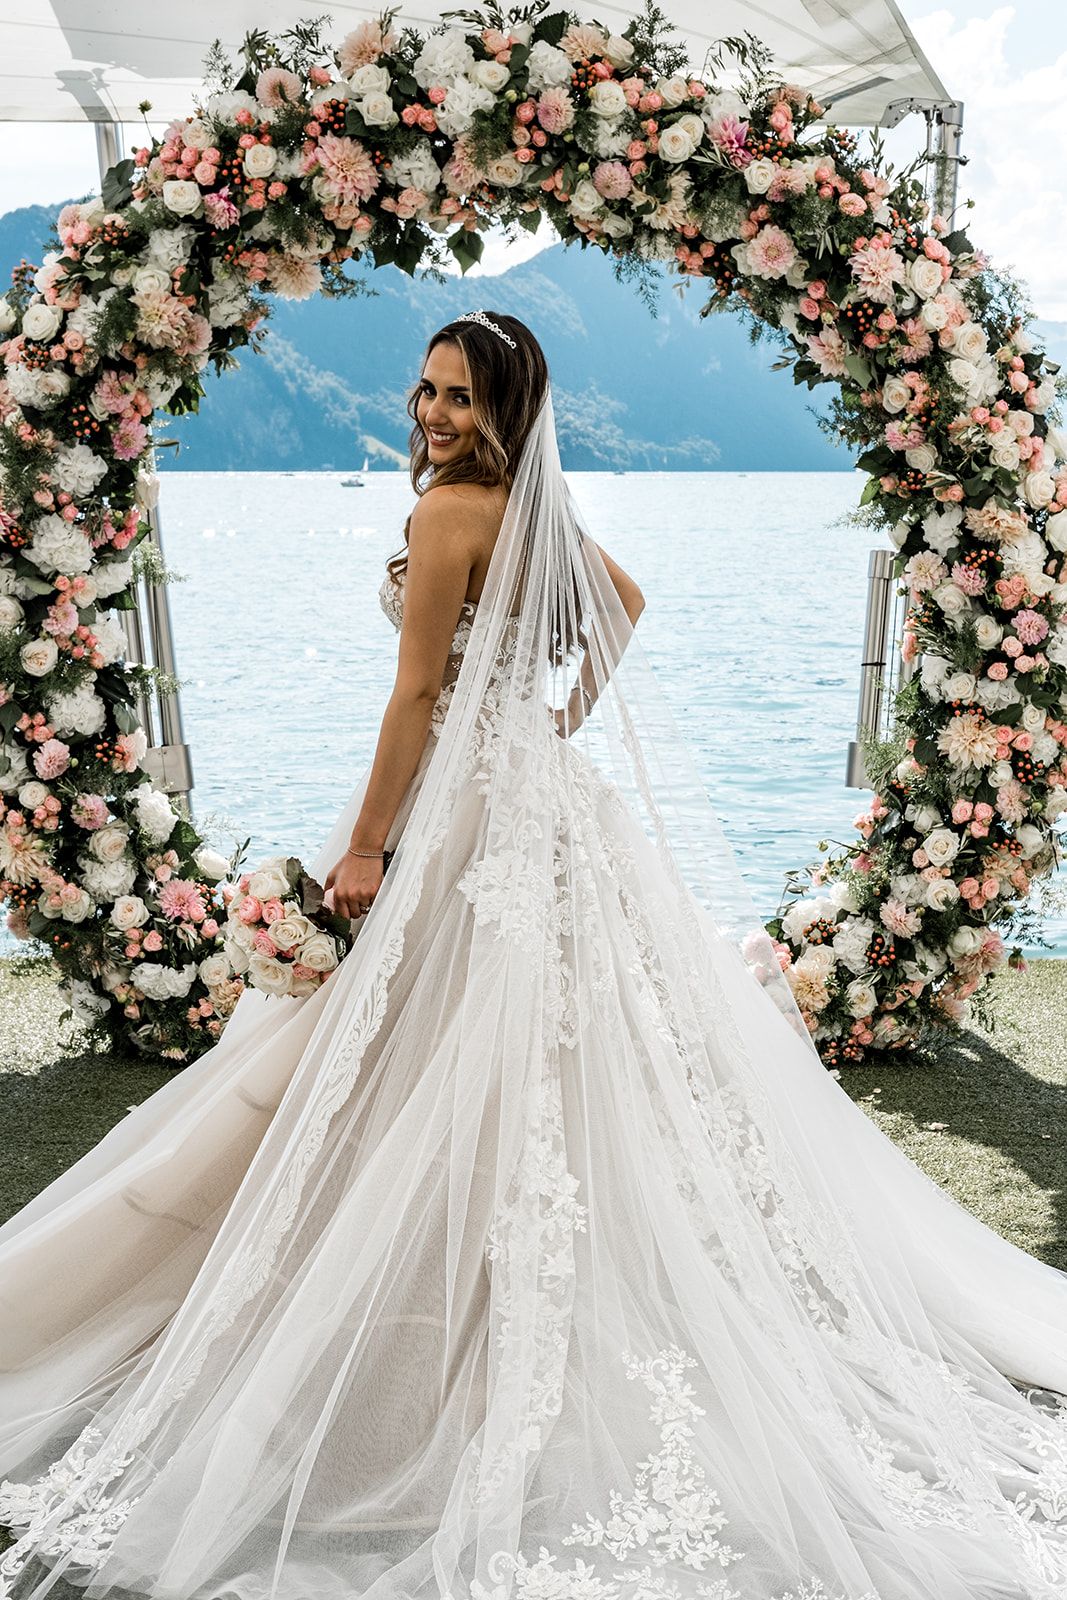 Bride stands in Galia Lahav wedding gown at floral ceremony arch for Switzerland destination wedding